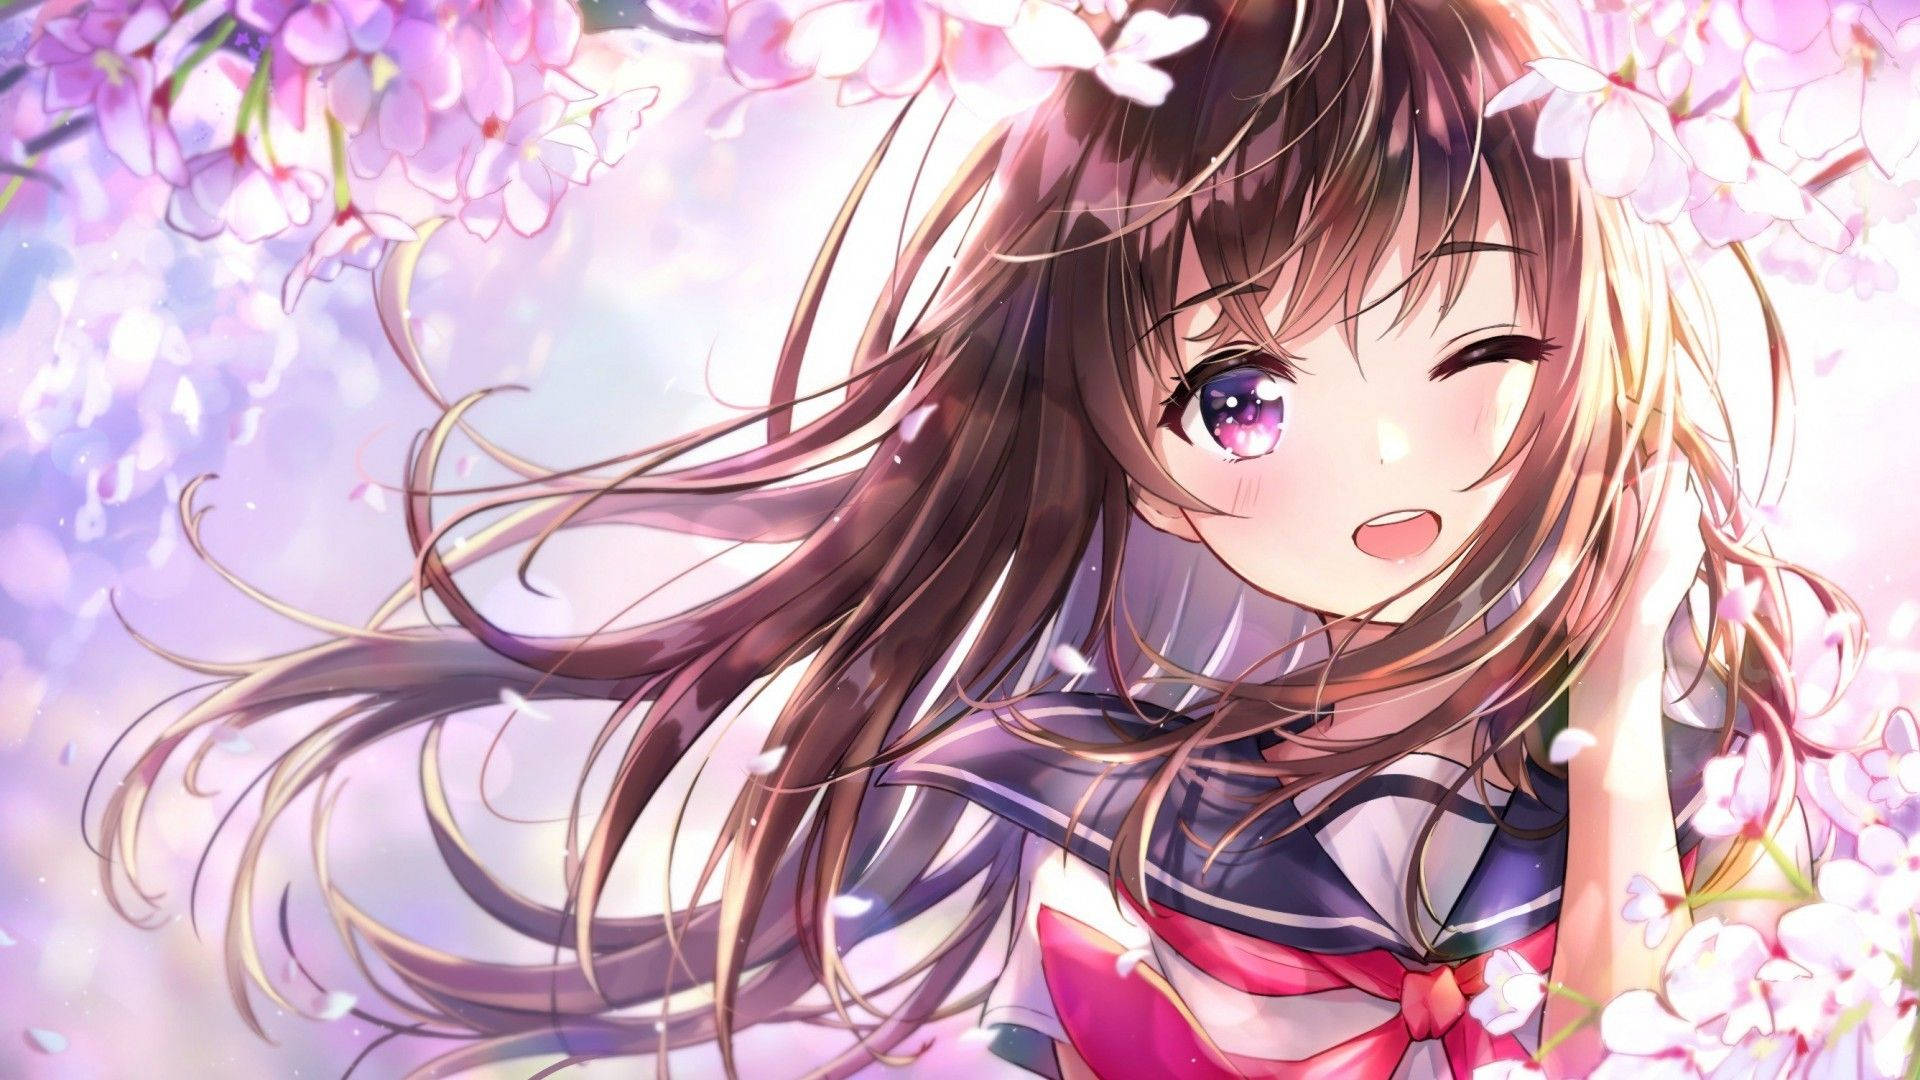 Cute Anime Girl Winking Wallpaper